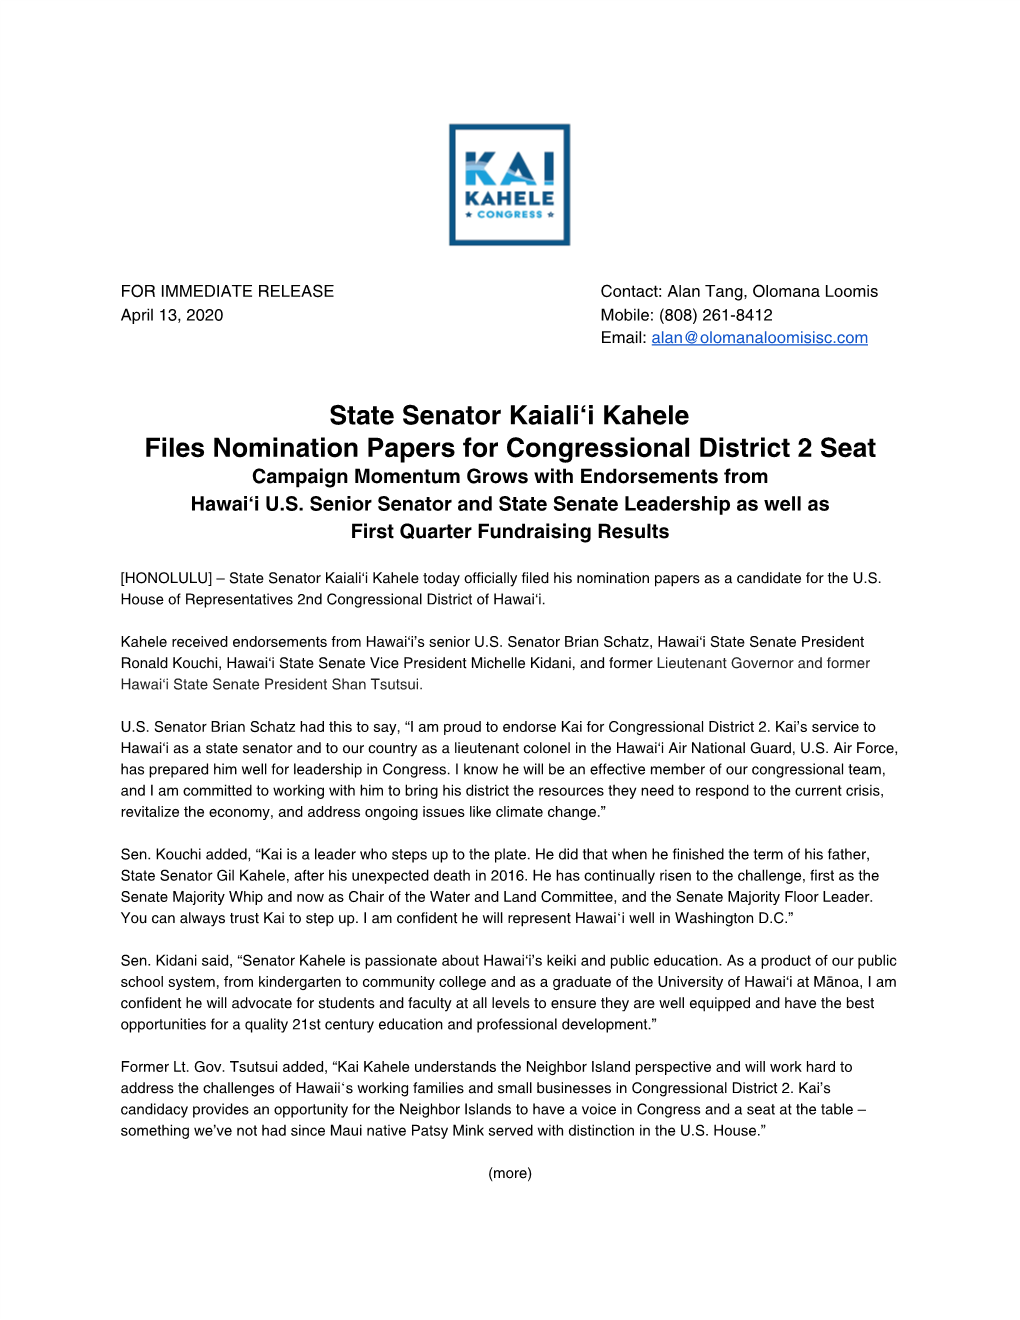 State Senator Kaiali'i Kahele Files Nomination Papers For